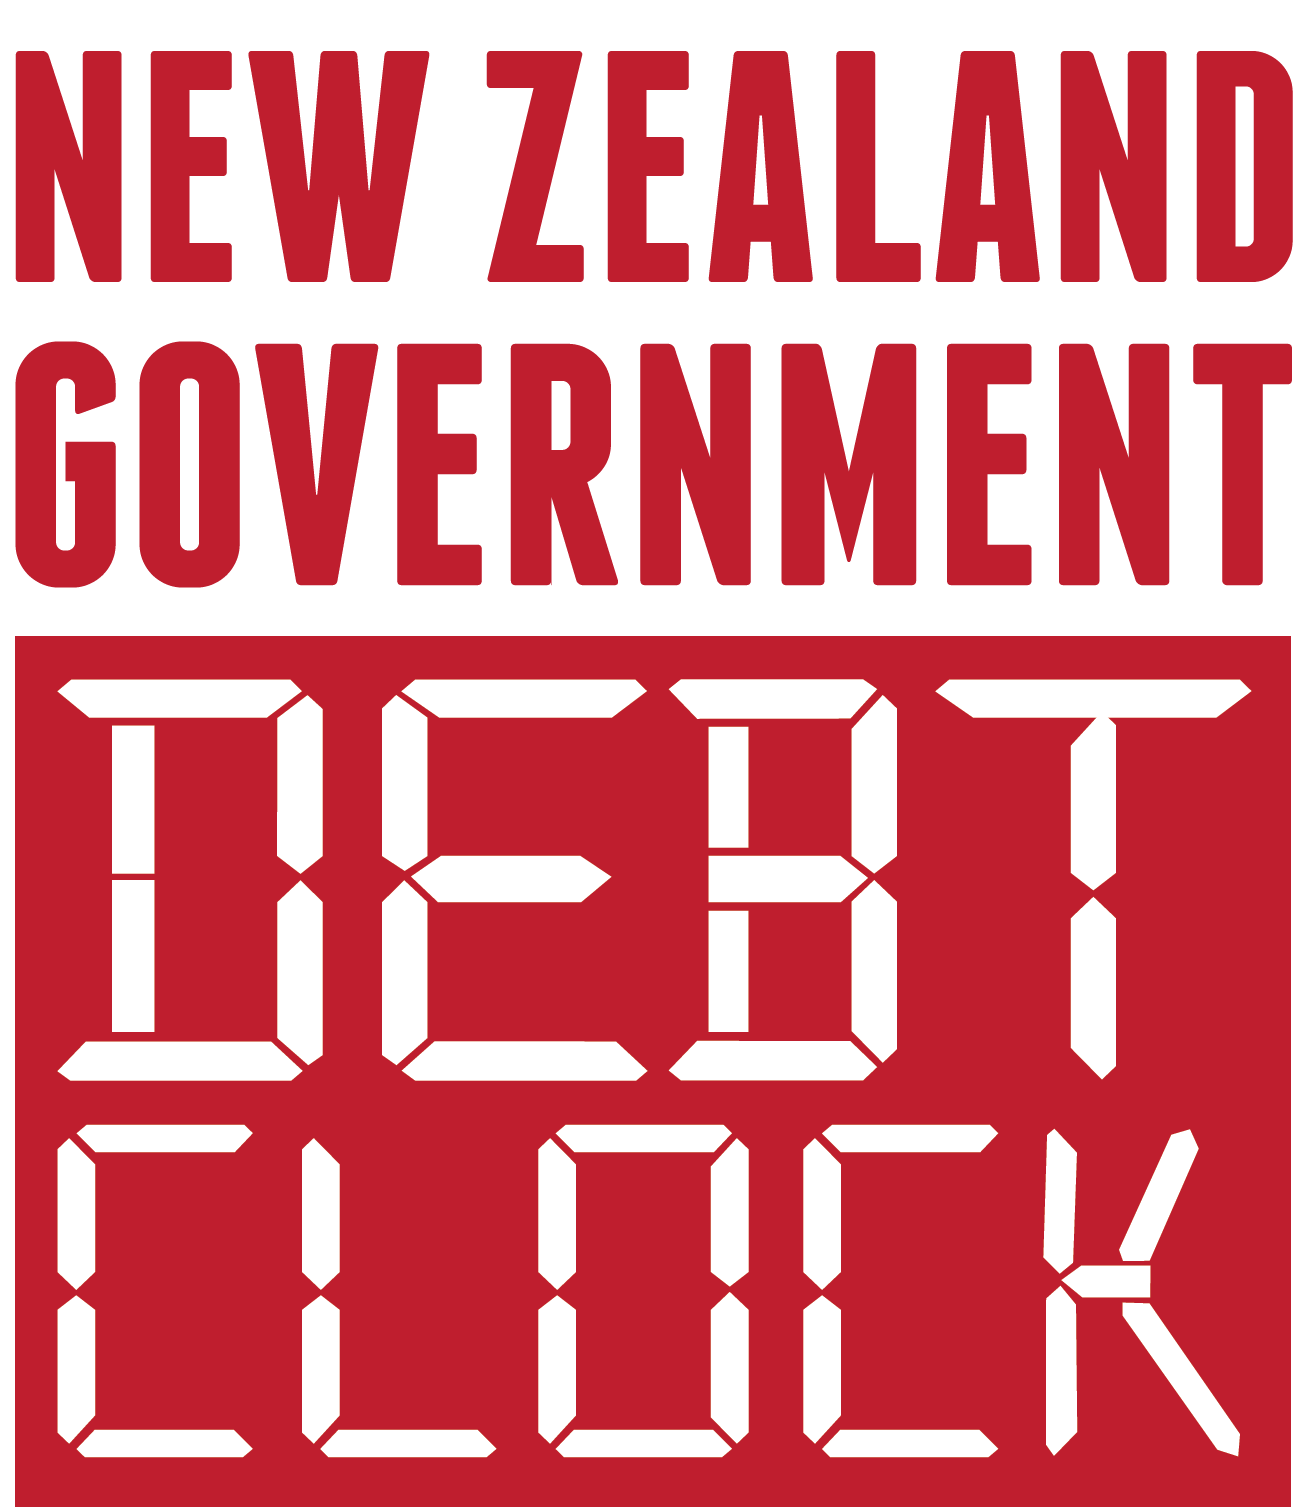 Debt Clock